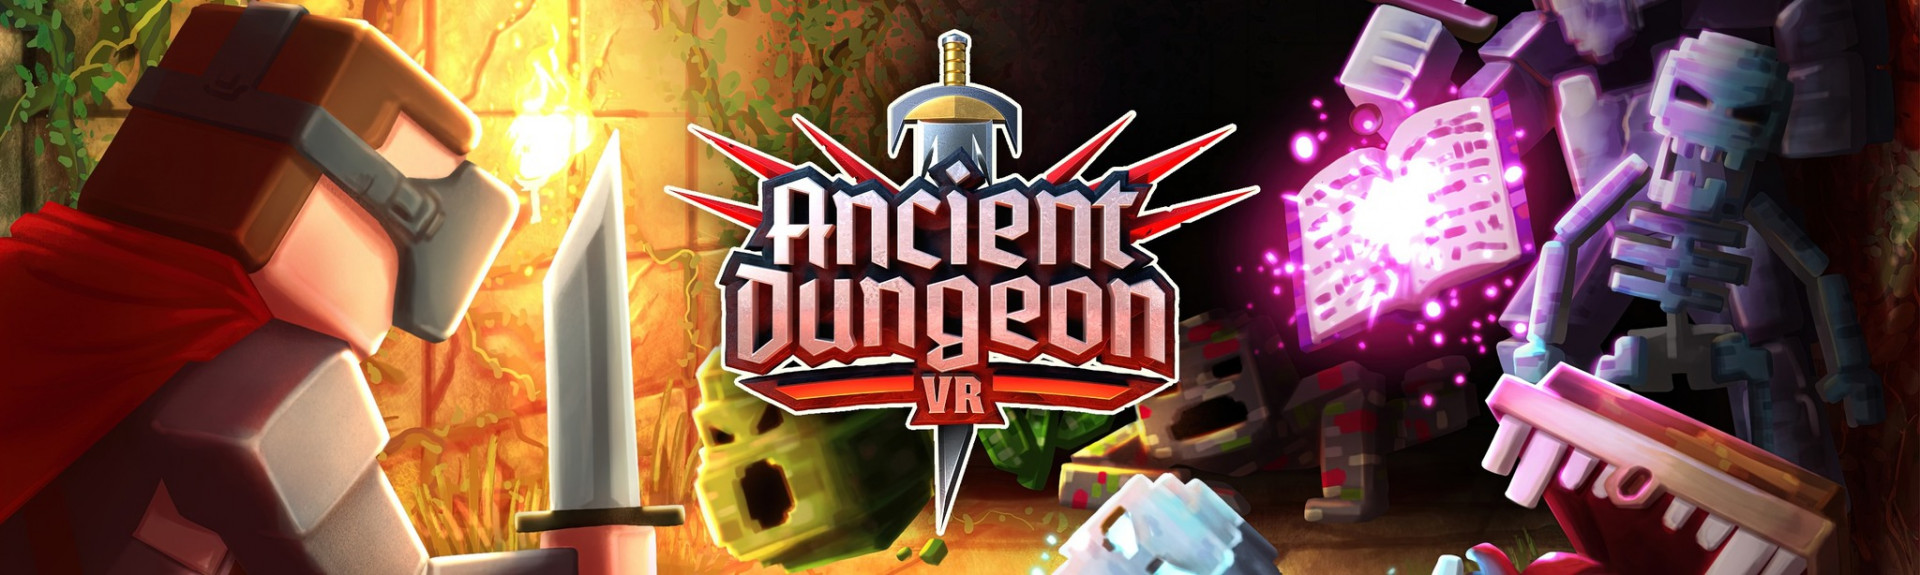 Ancient Dungeon VR: ANÁLISIS